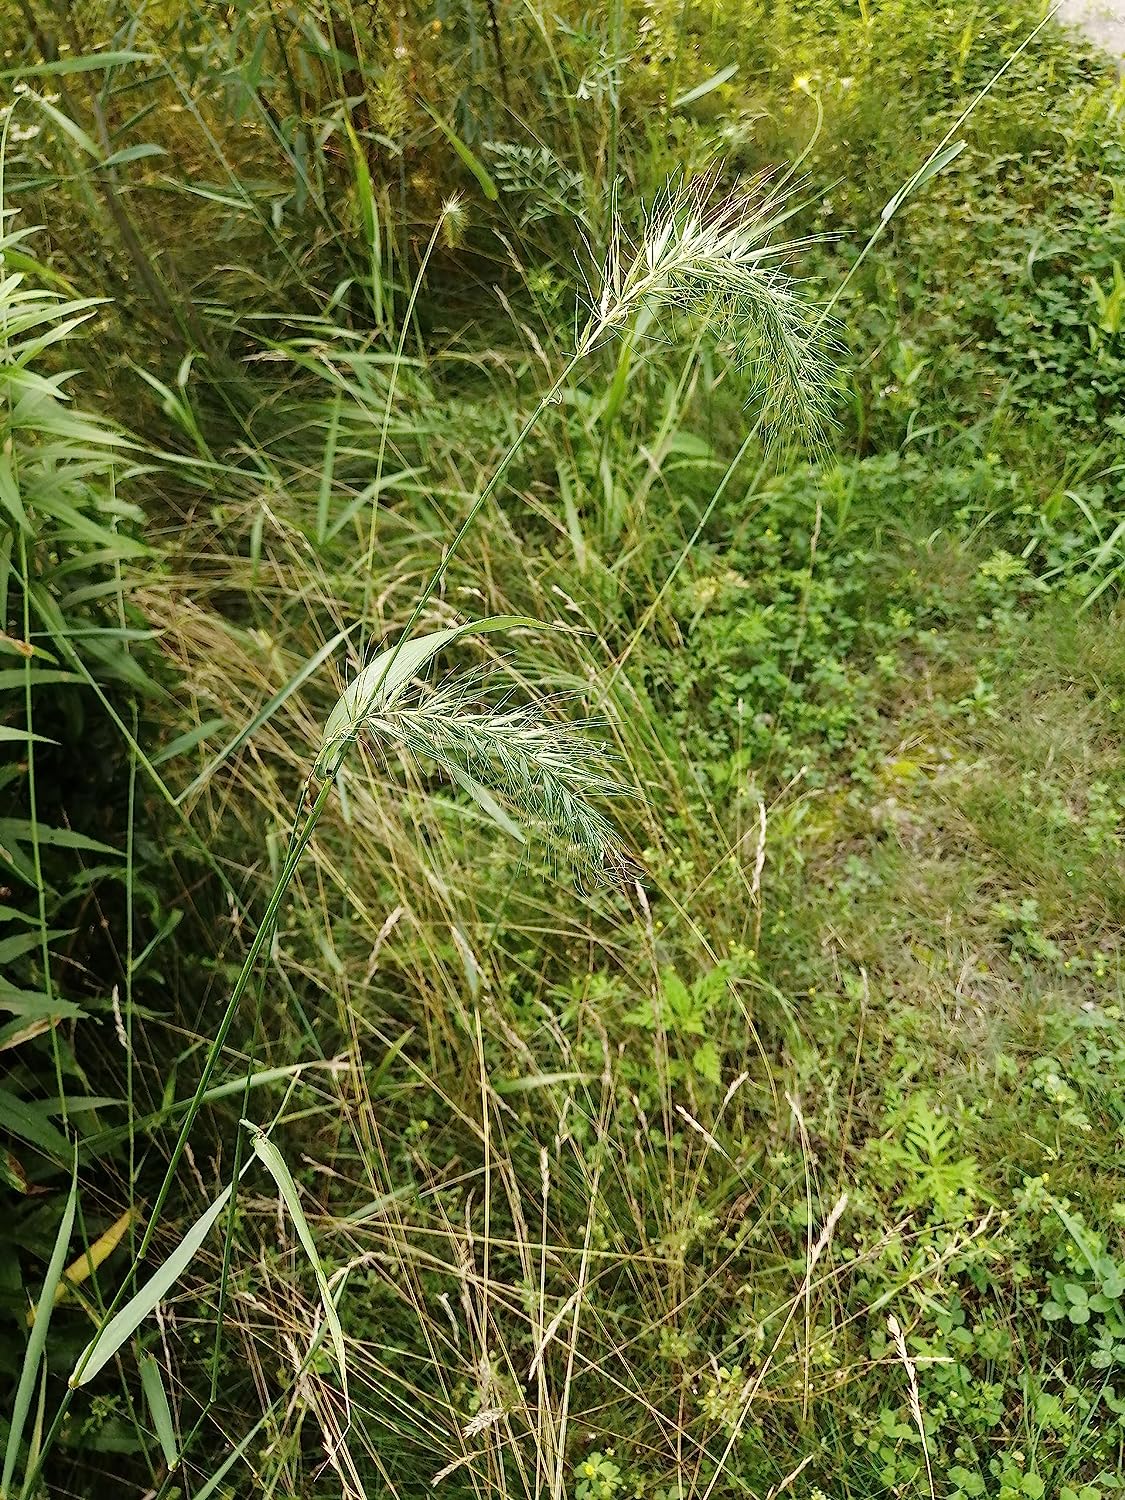 Hundredfold Canada Wild Rye Grass 100 Seeds - Elymus canadensis Ontario Native Prairie Wildrye, Nodding Wild Rye Perfect for Erosion Control or Ornamental Grass